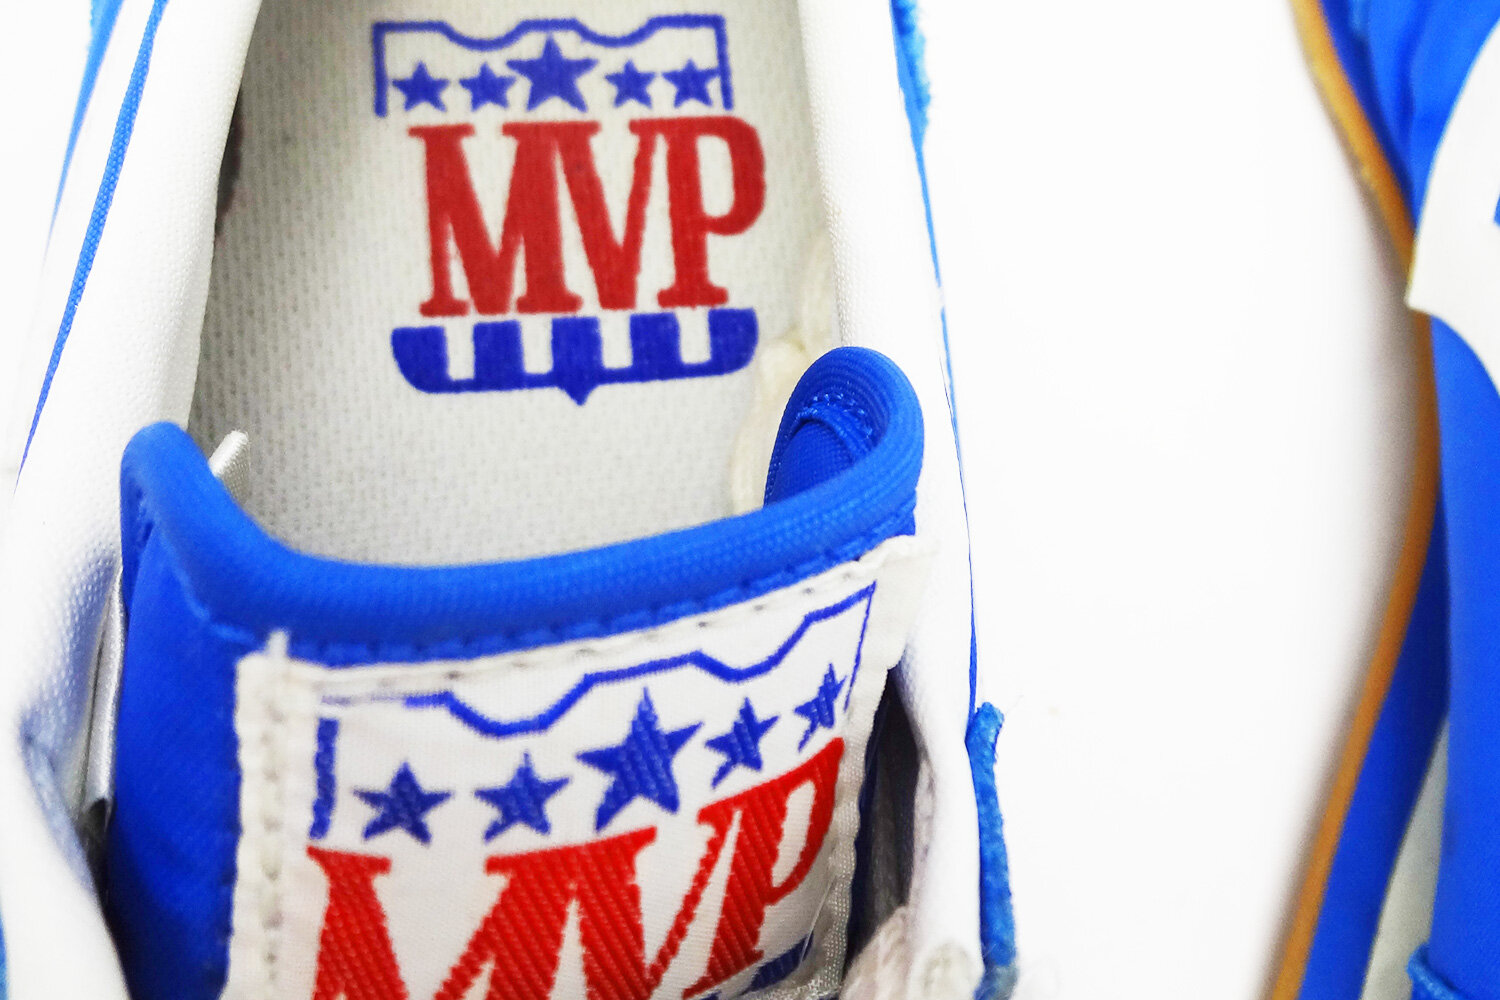 MVP brand vintage sneaker woven label detail @ The Deffest